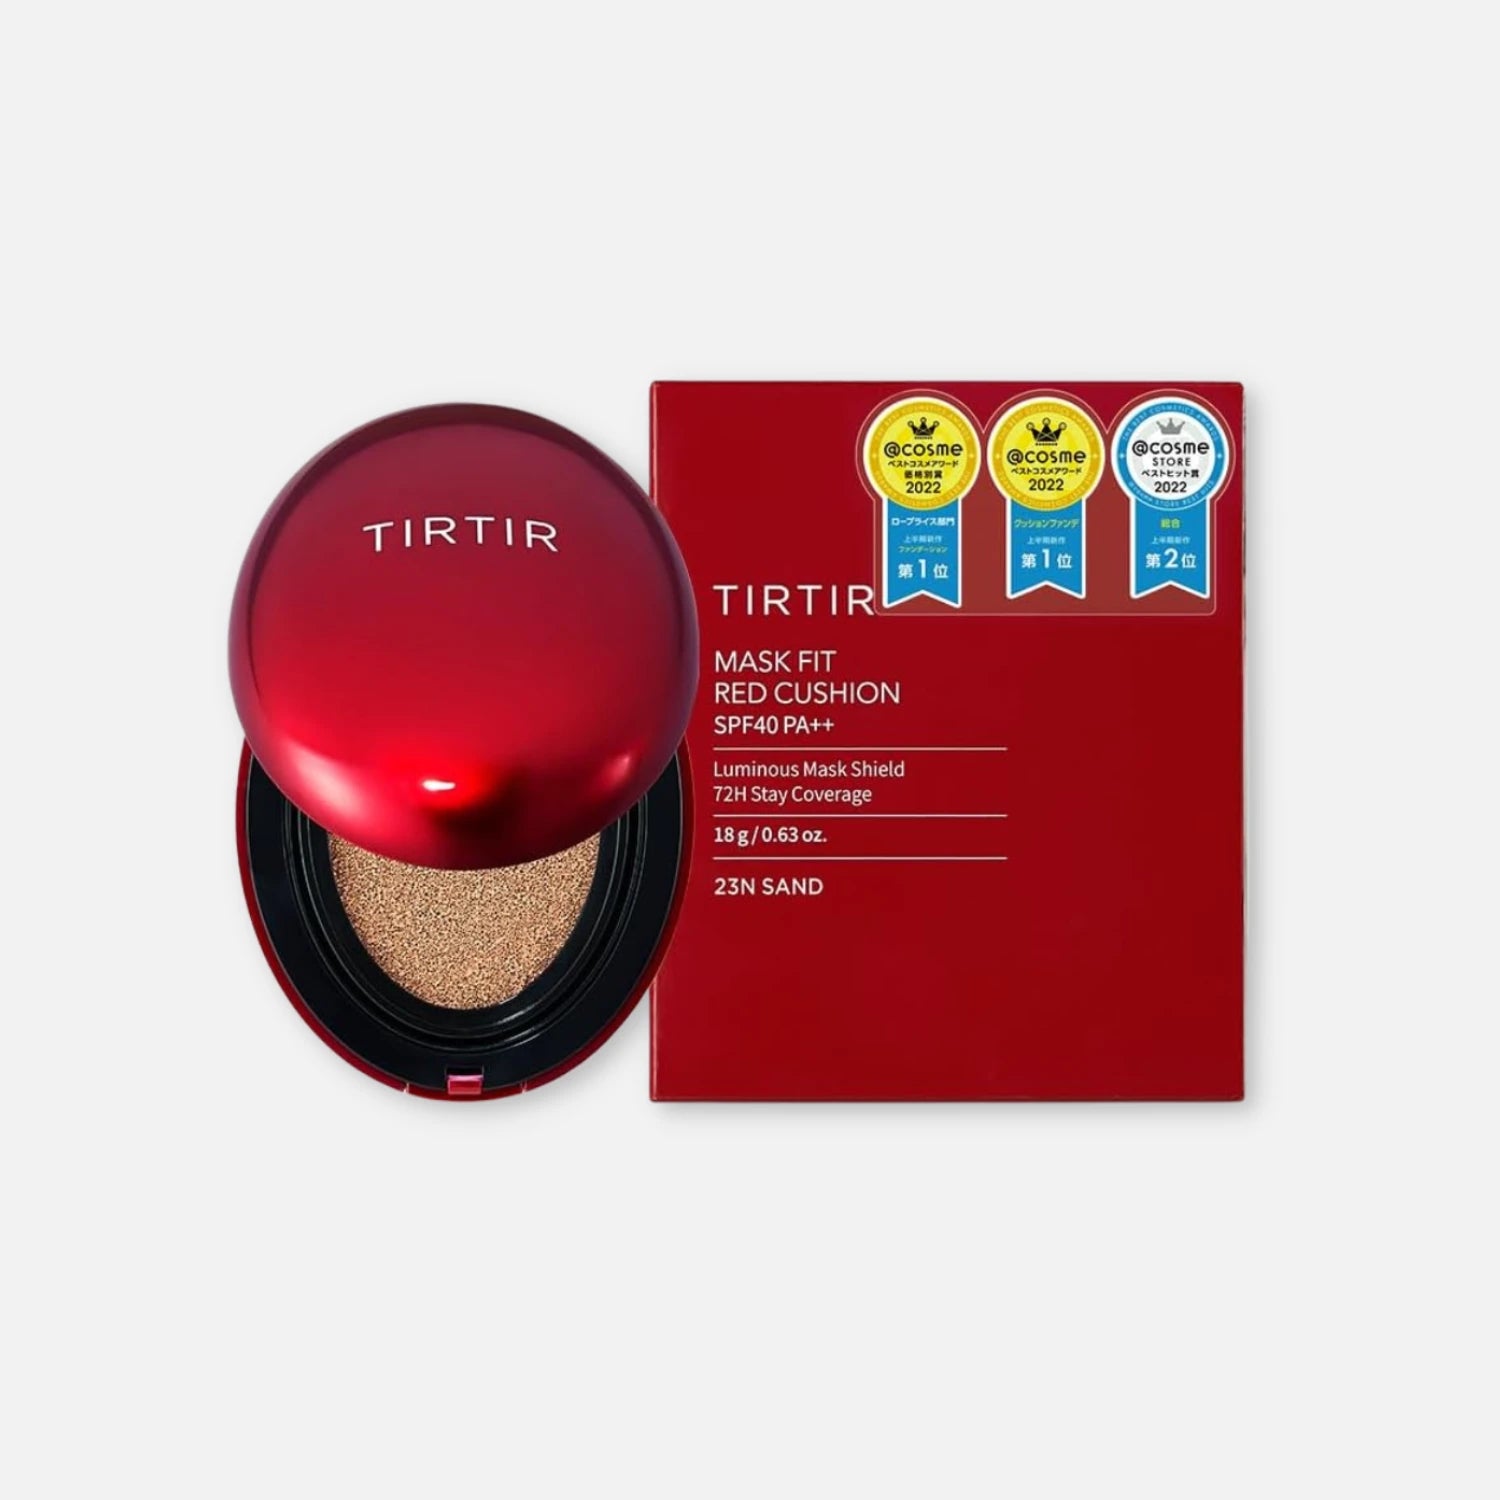 TIRTIR Mask Fit Red Cushion SPF 40 PA++ 18g (Various Shades) - Buy Me Japan